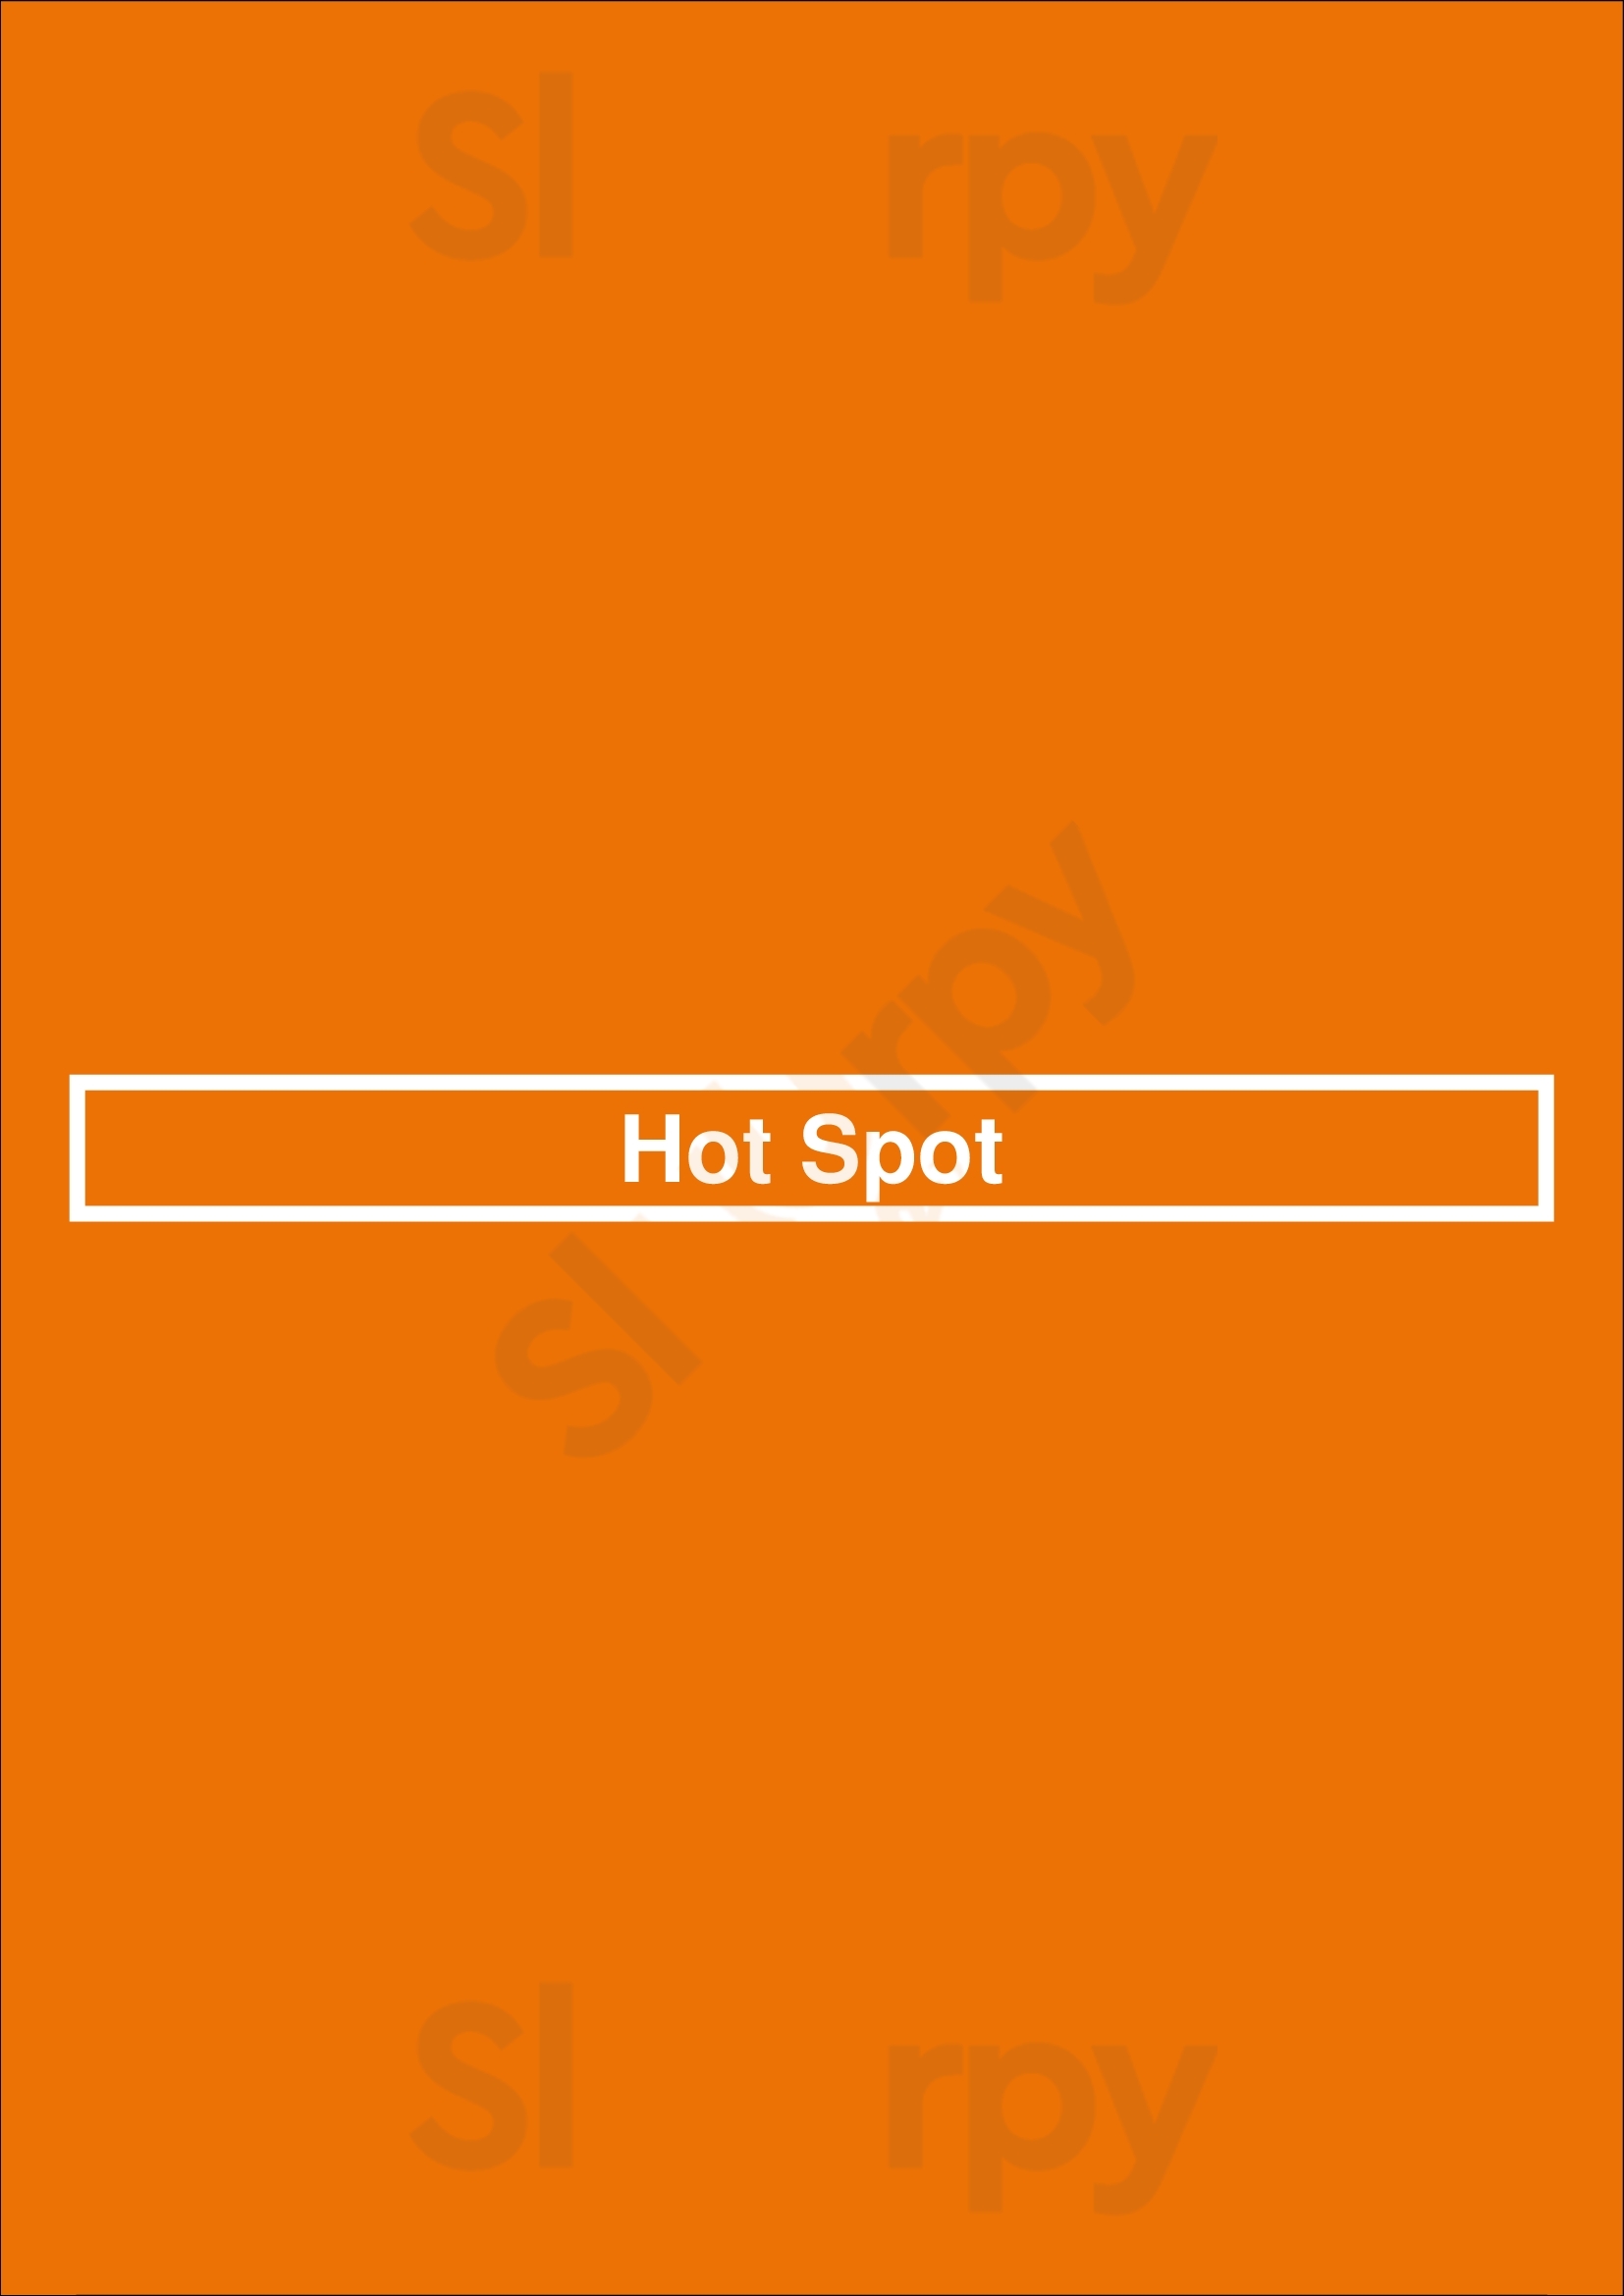 Hot Spot Glasgow Menu - 1